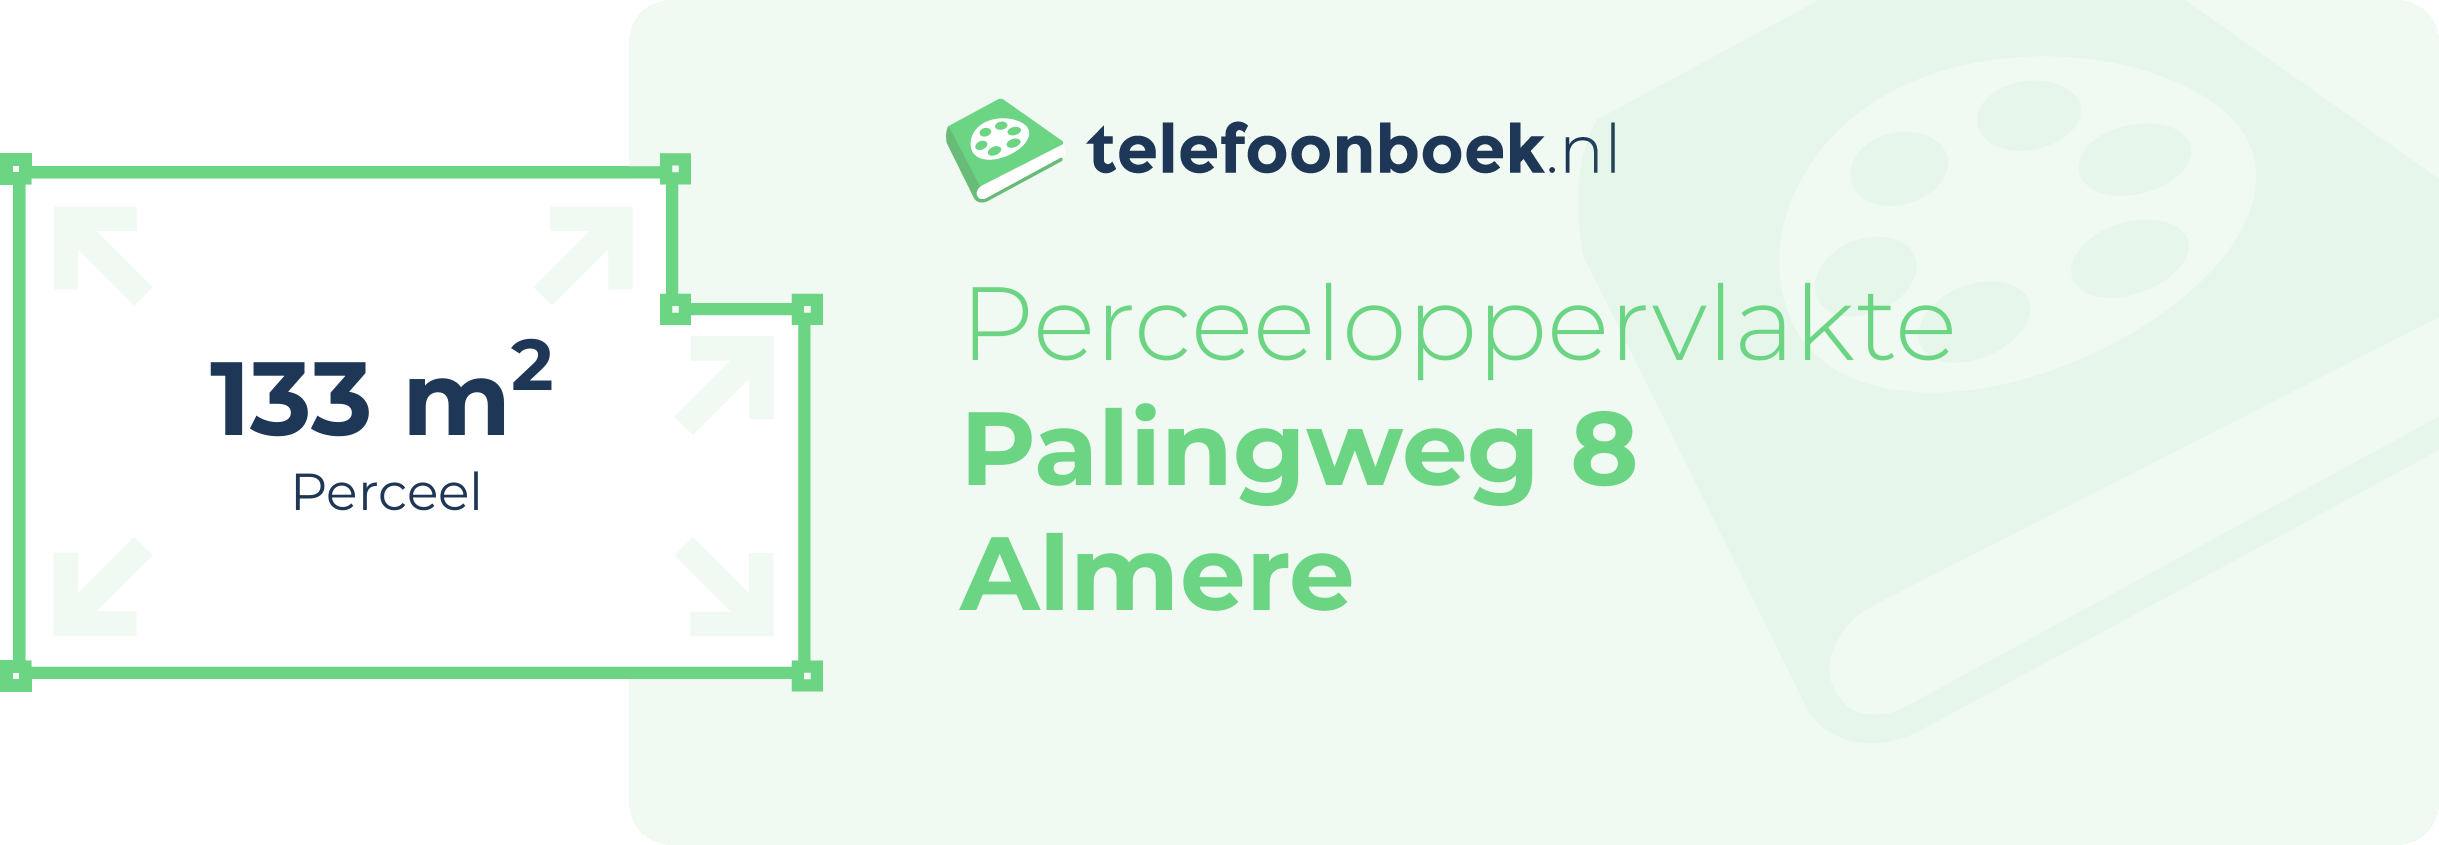 Perceeloppervlakte Palingweg 8 Almere